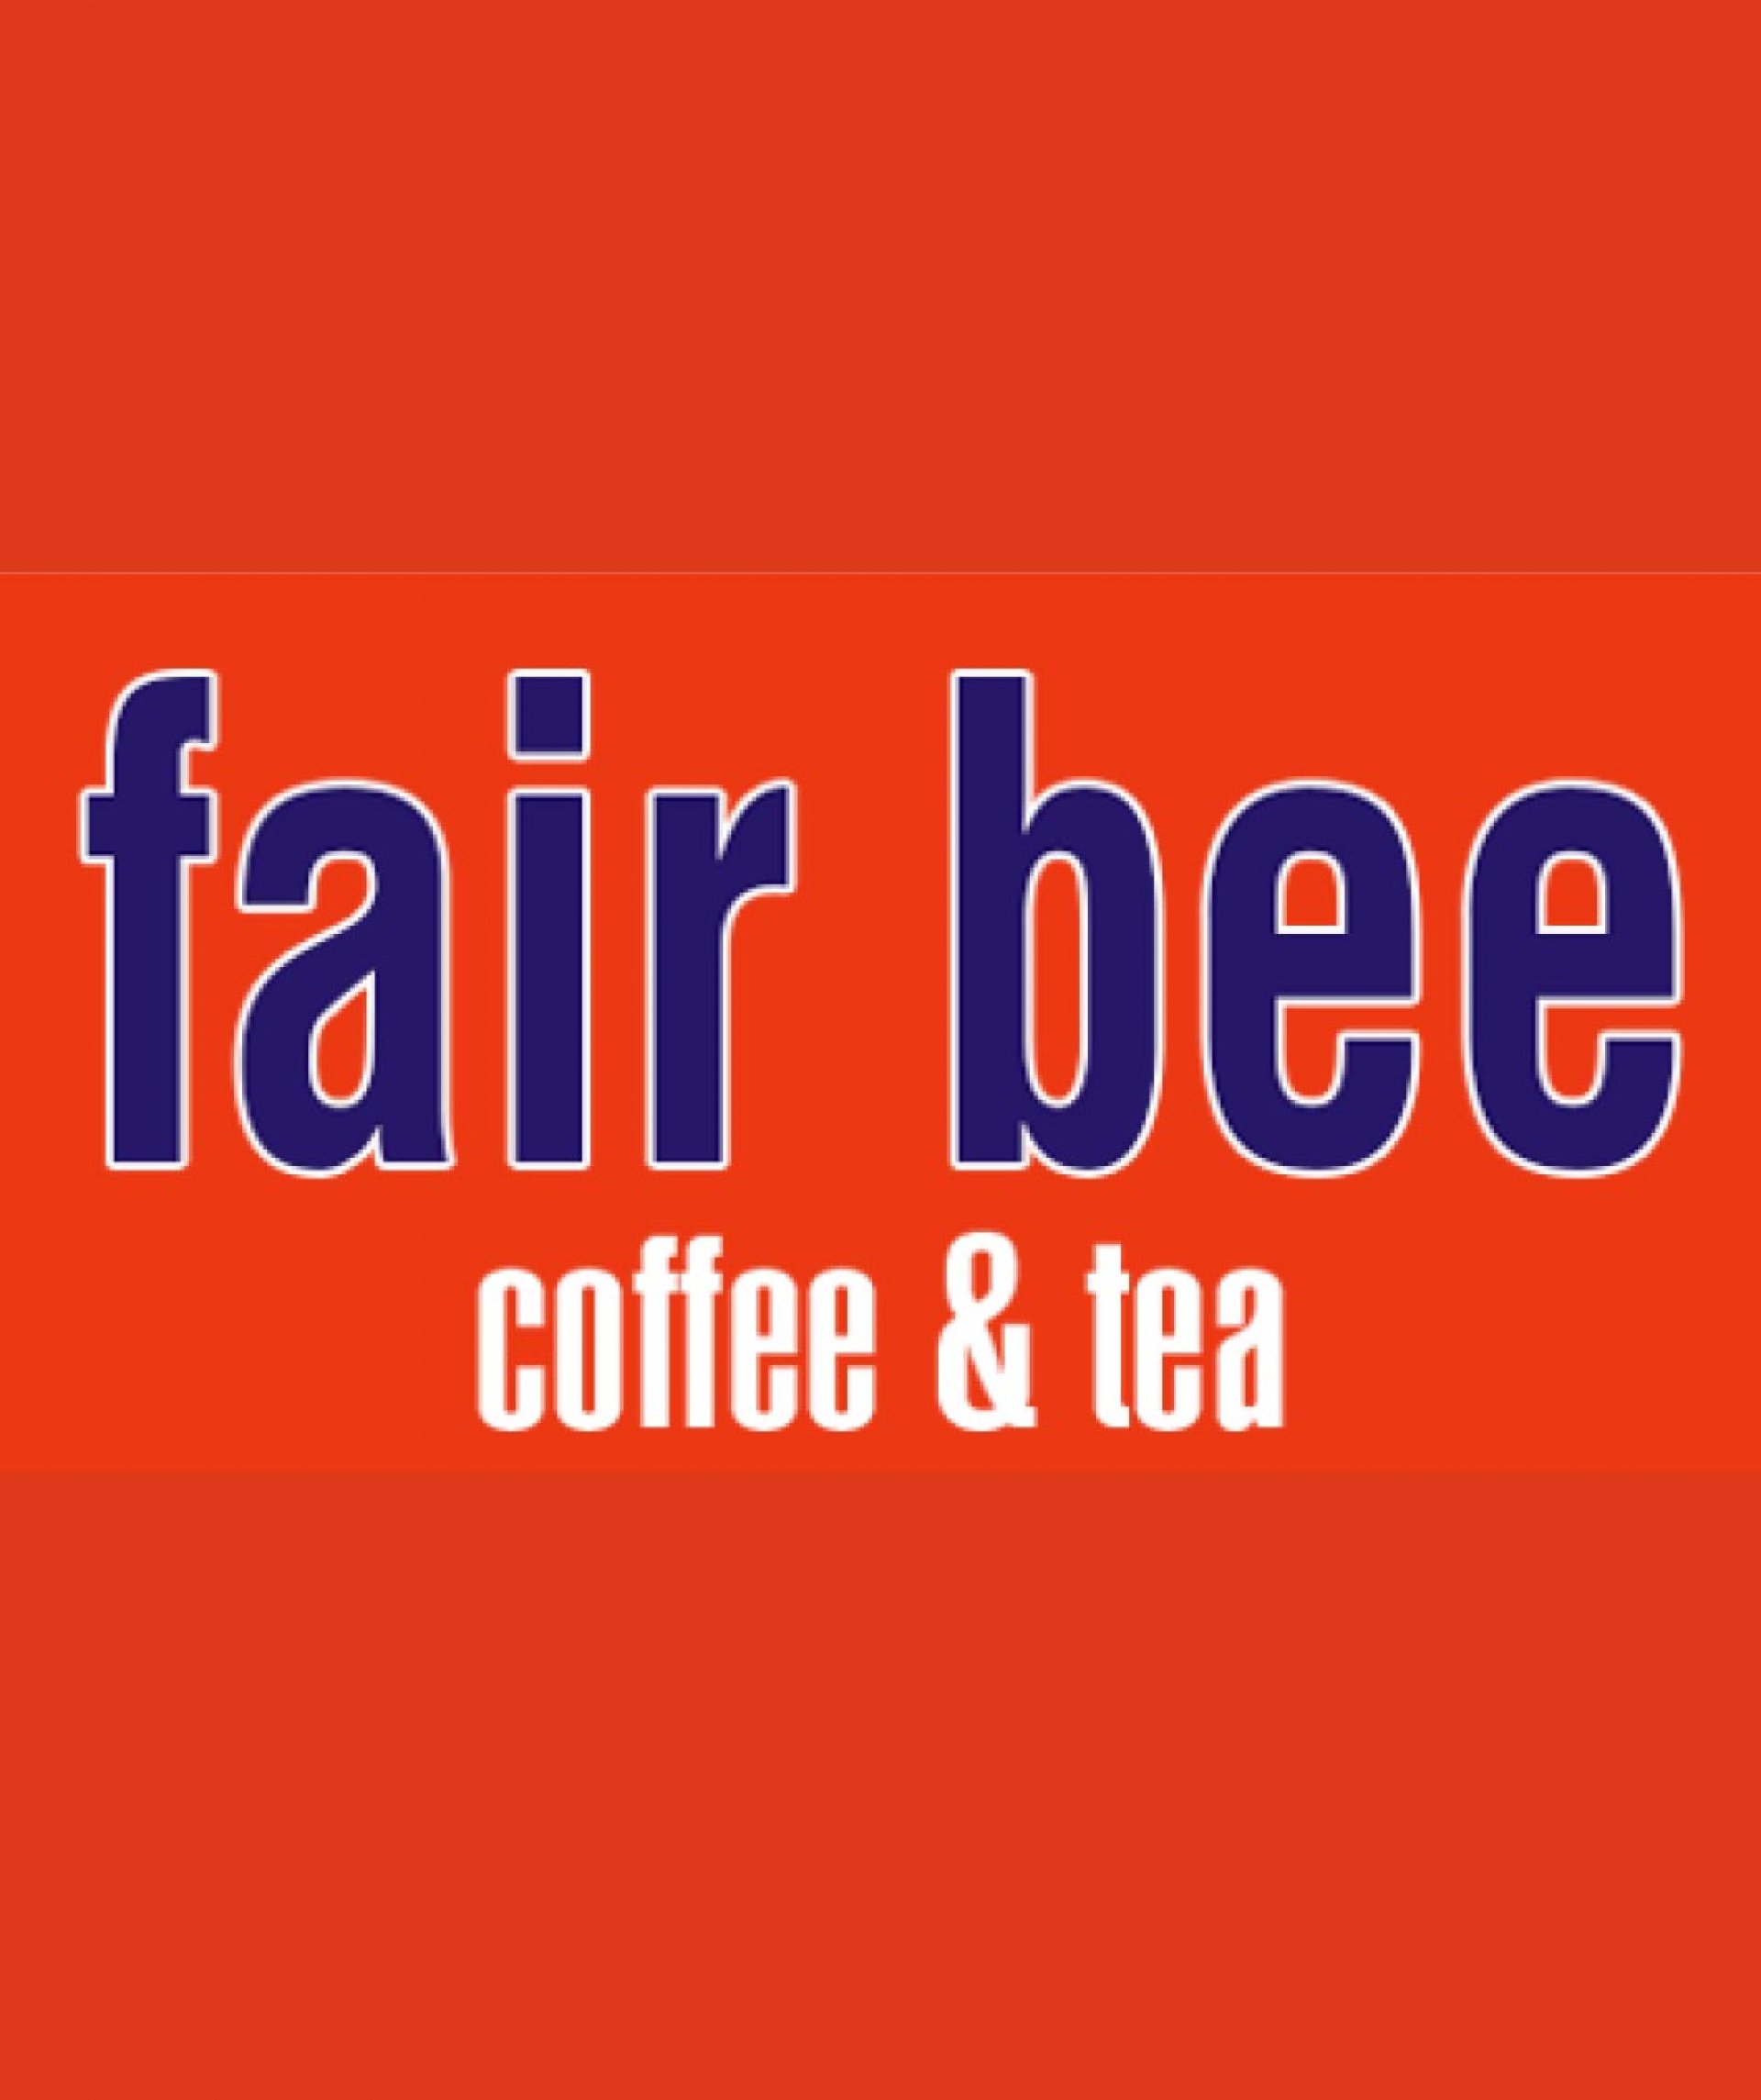 Fair bee coffee & Tea / Canada